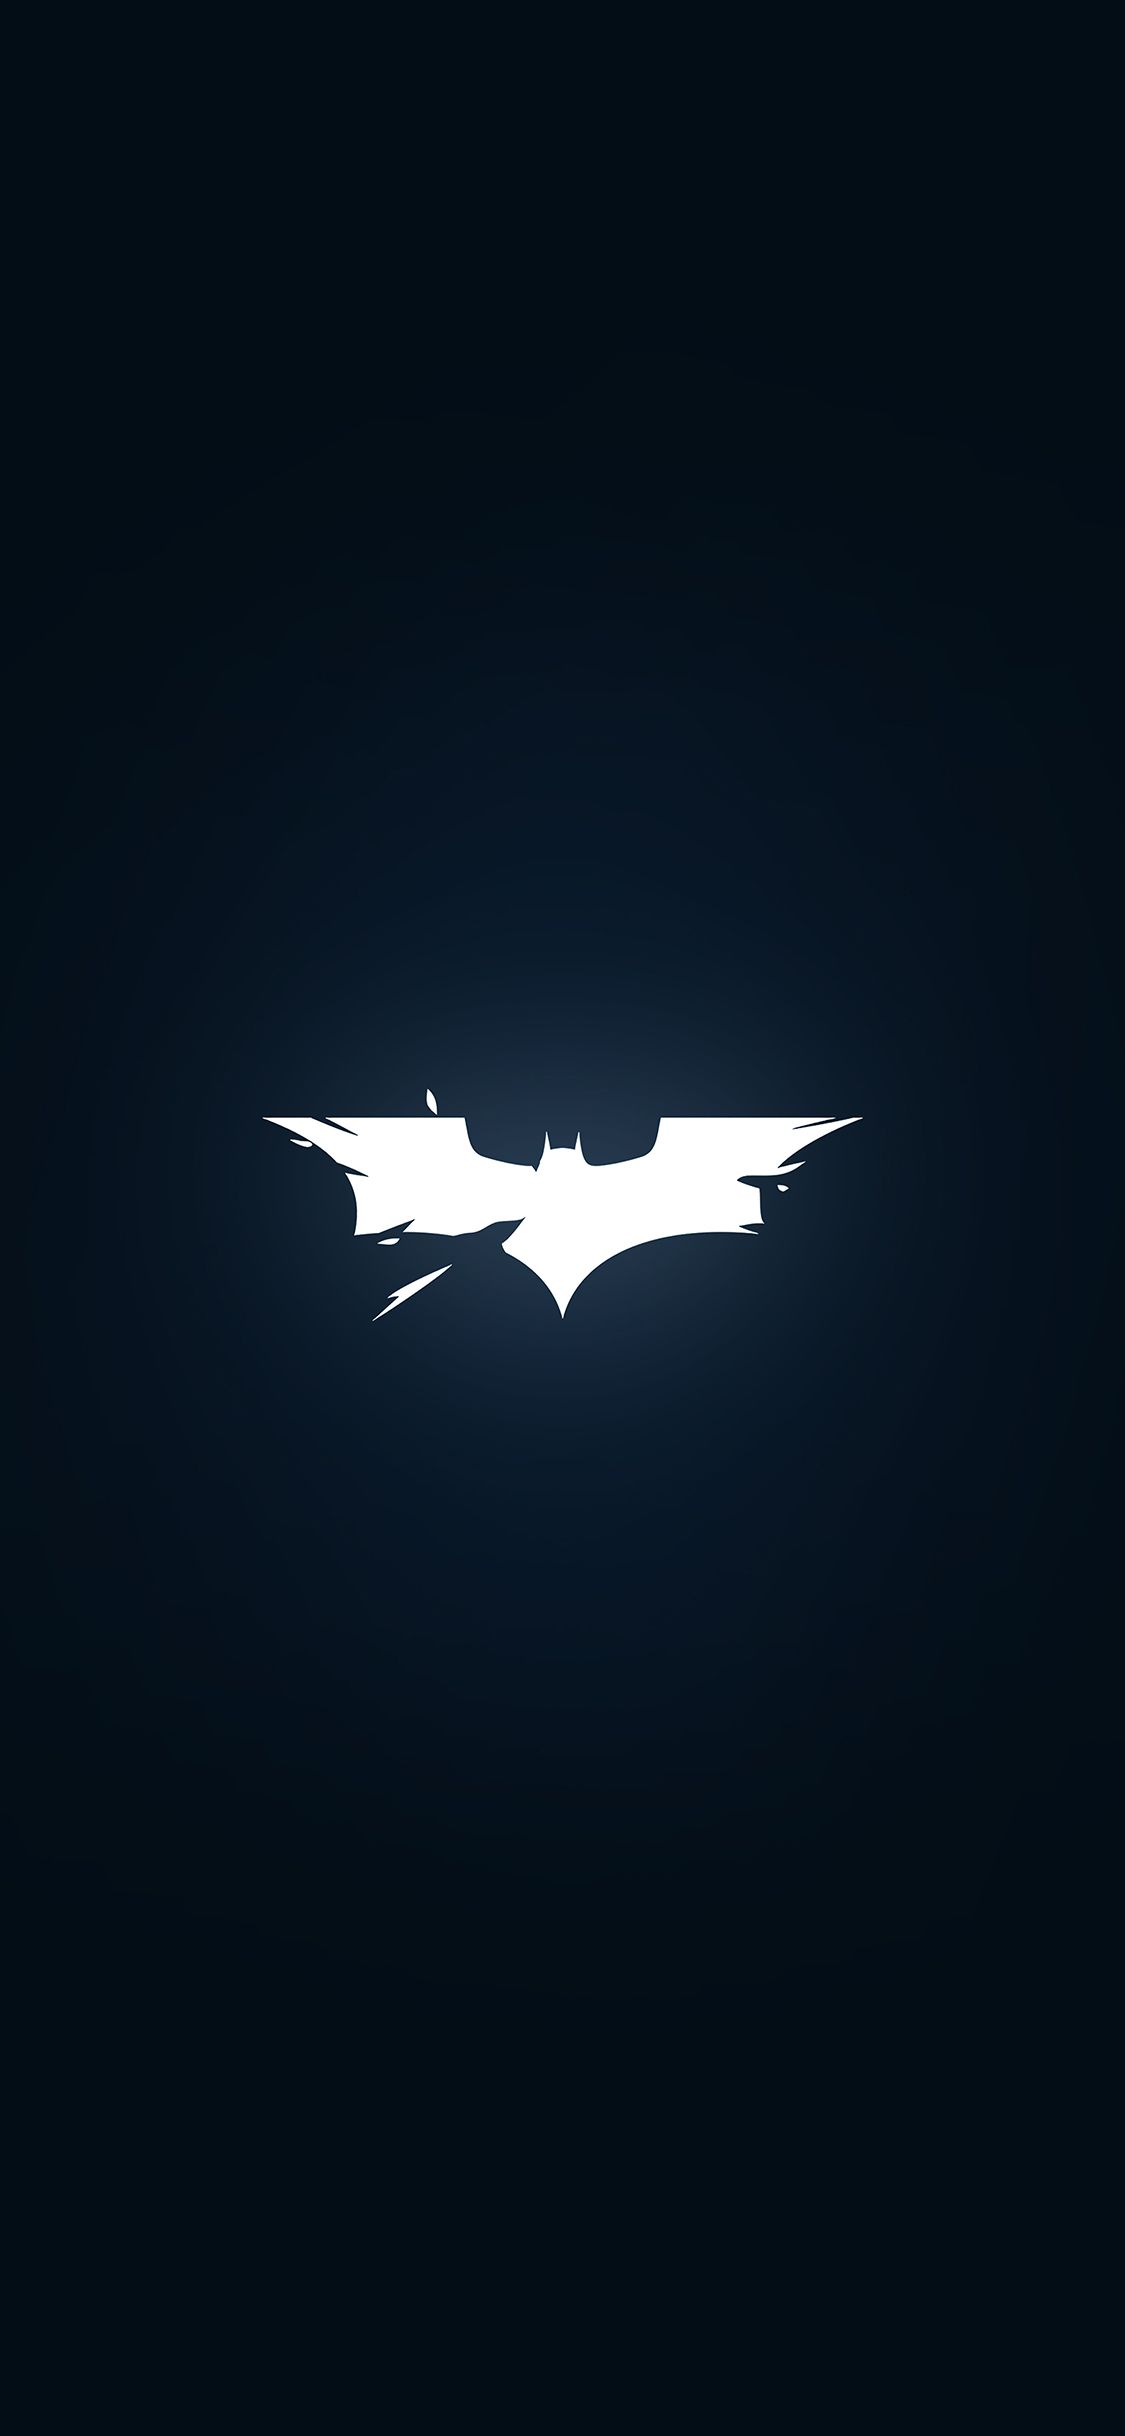 iPhonePapers batman logo dark shattered